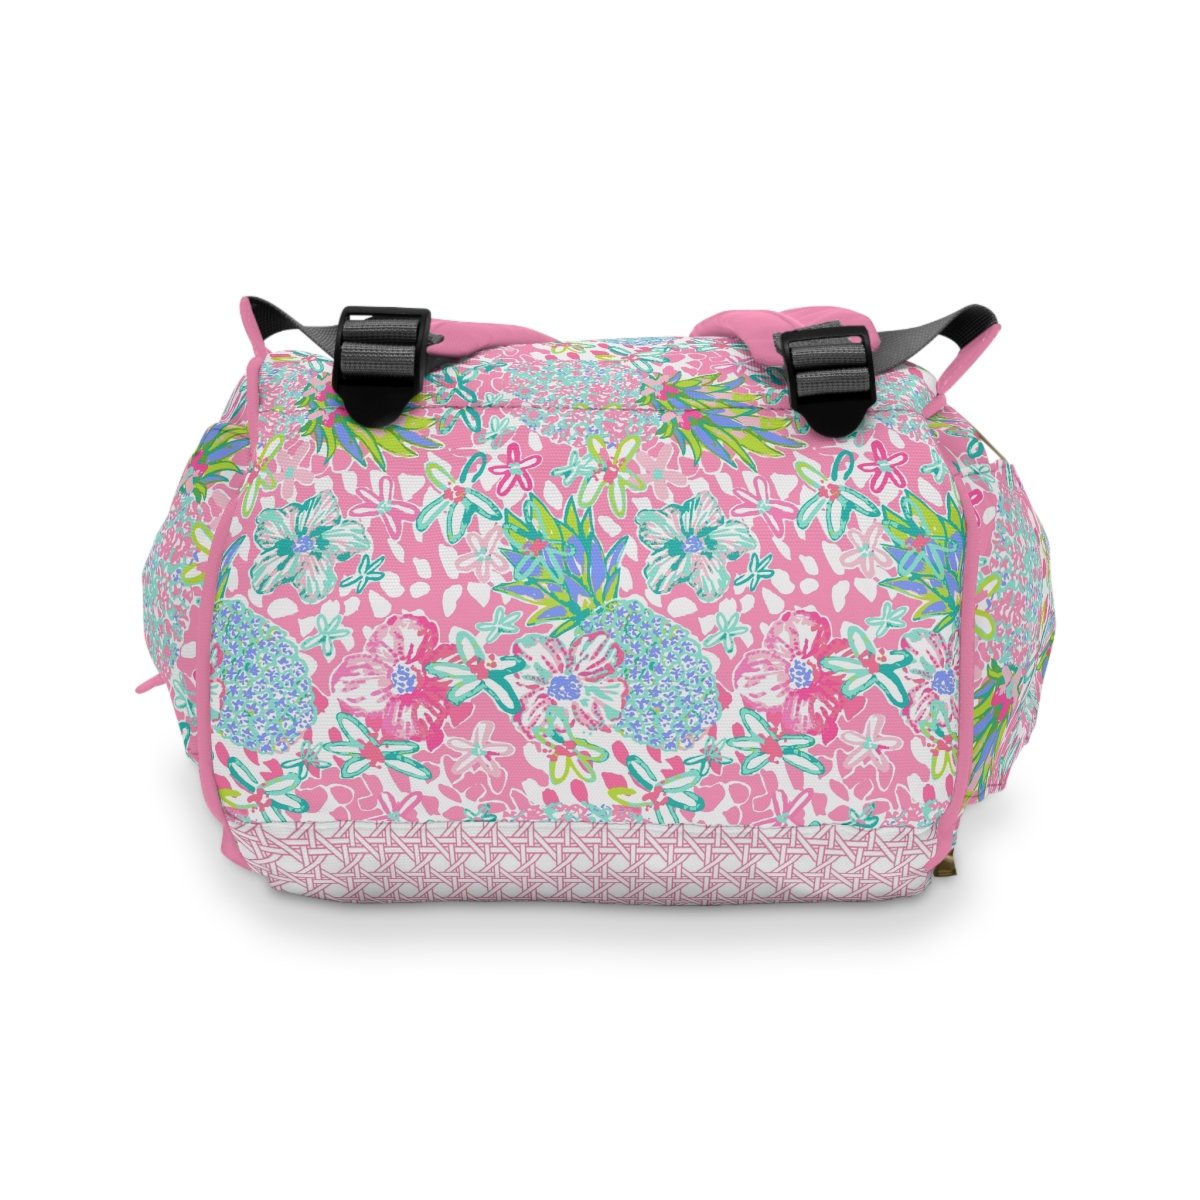 Preppy Summer Personalized Backpack Diaper Bag - gender_girl, Preppy Summer, text